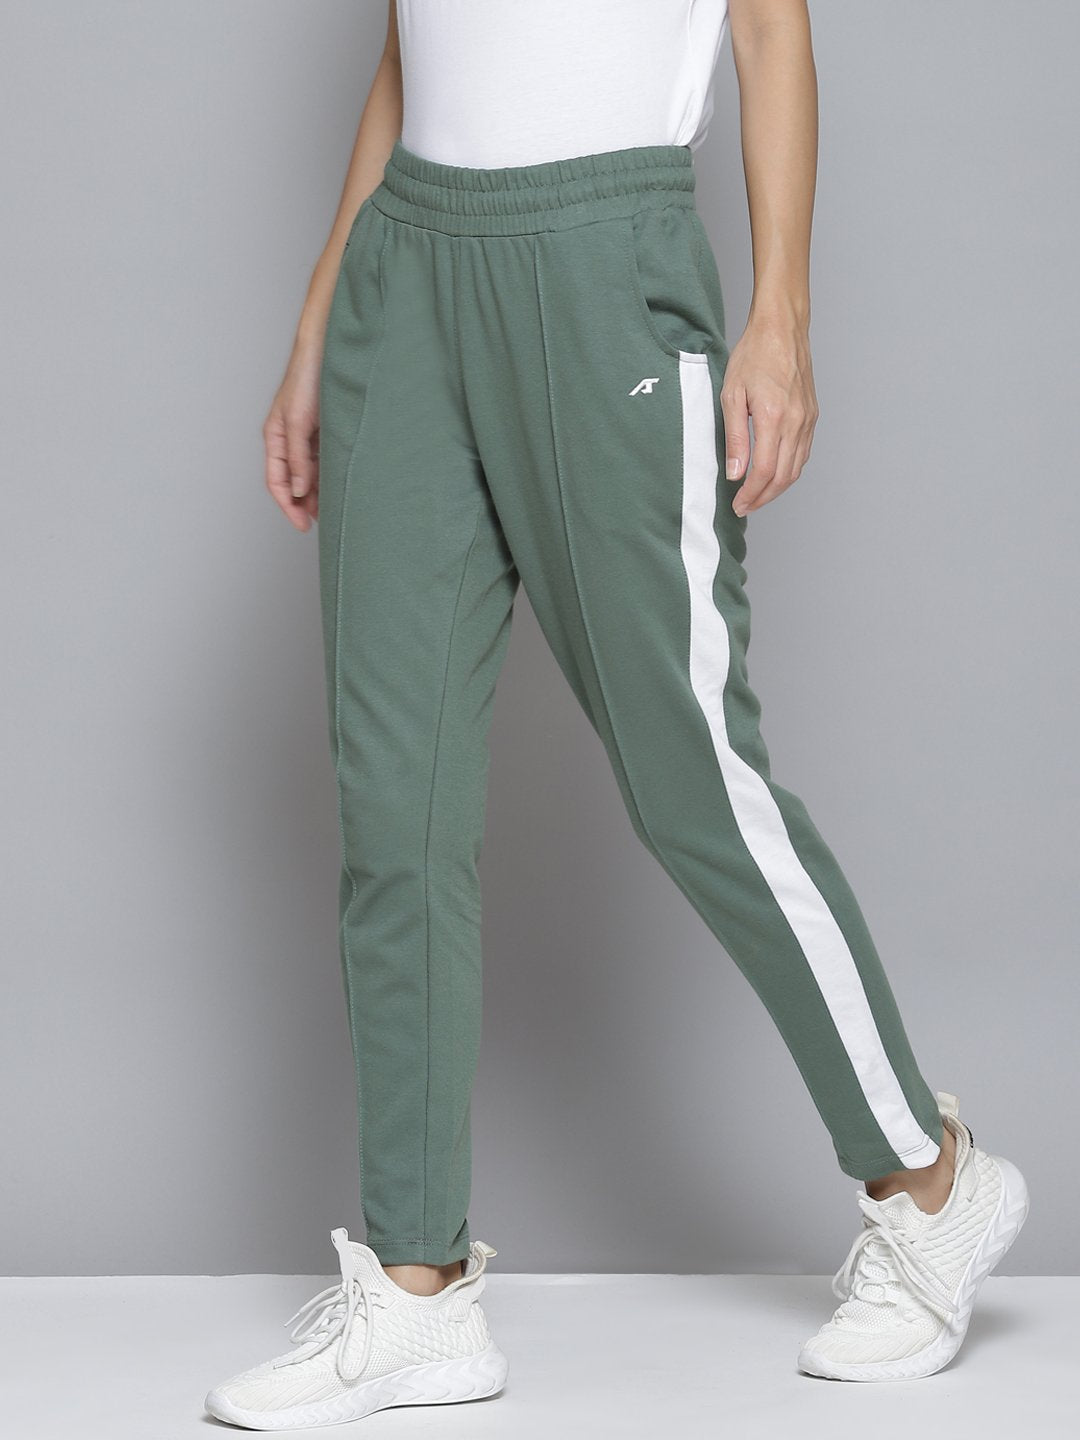 Rosie Assoulin Billab-long Track Pants | Shopbop